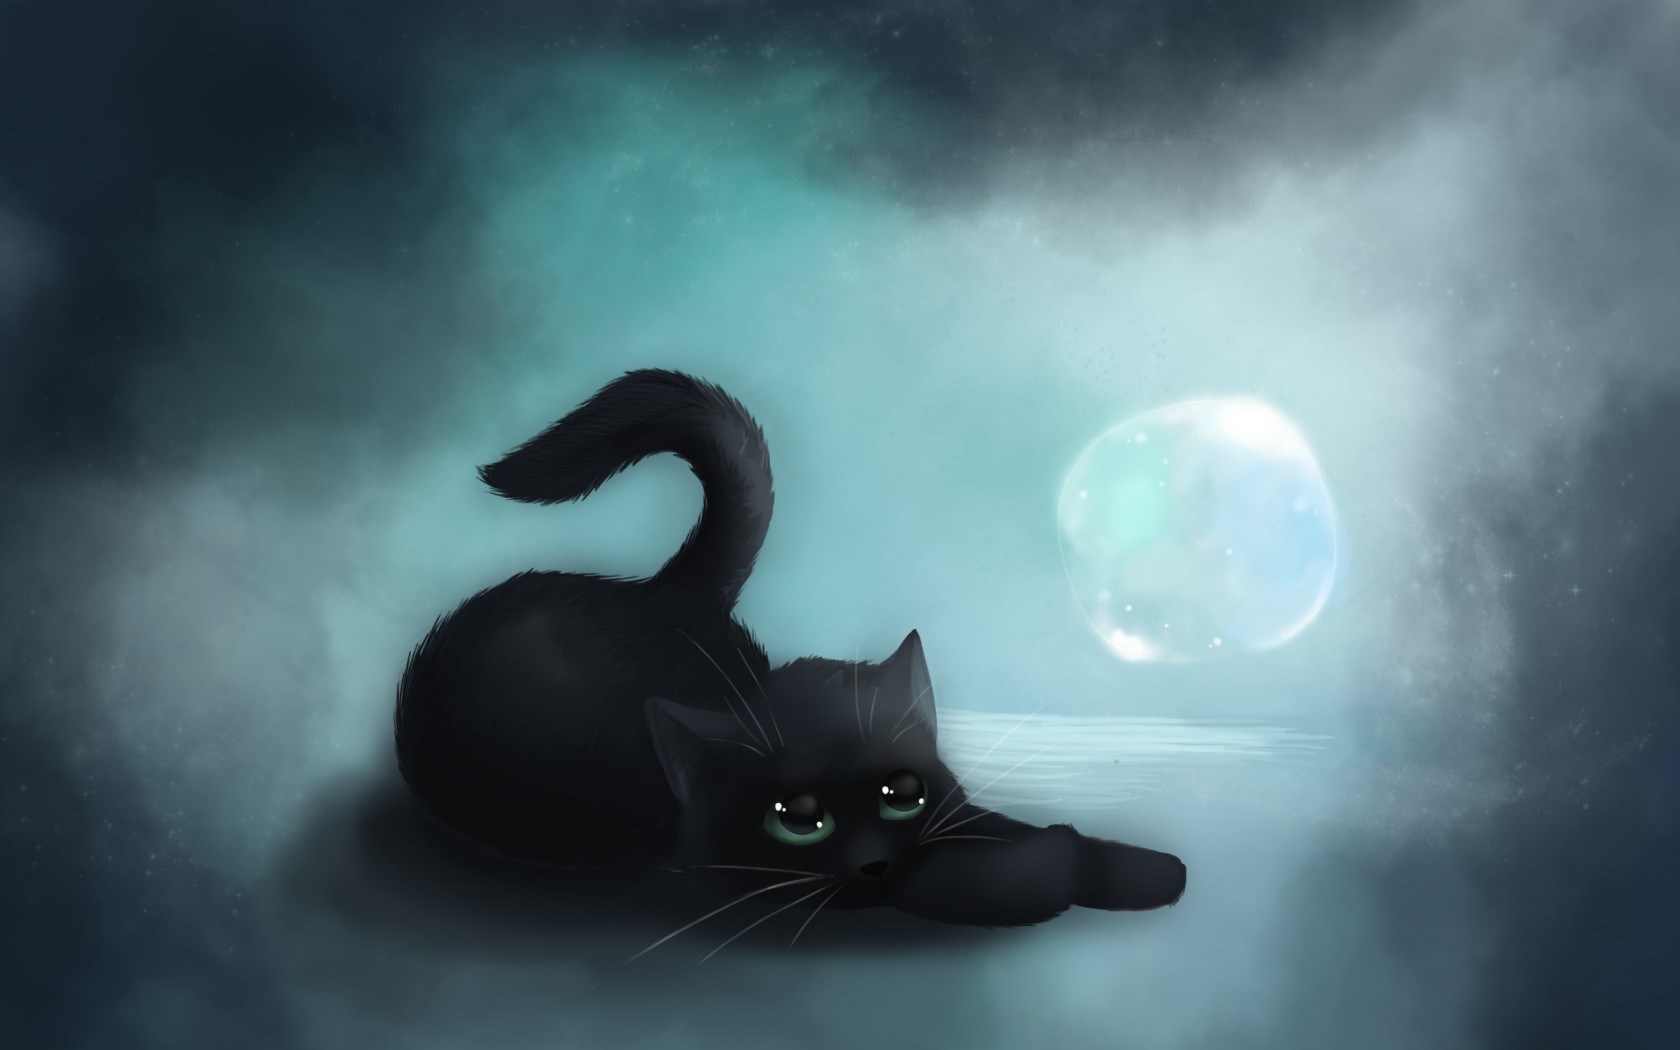  download Black Cat In Moon Wallpaper Picture 12958 Wallpaper 1680x1050